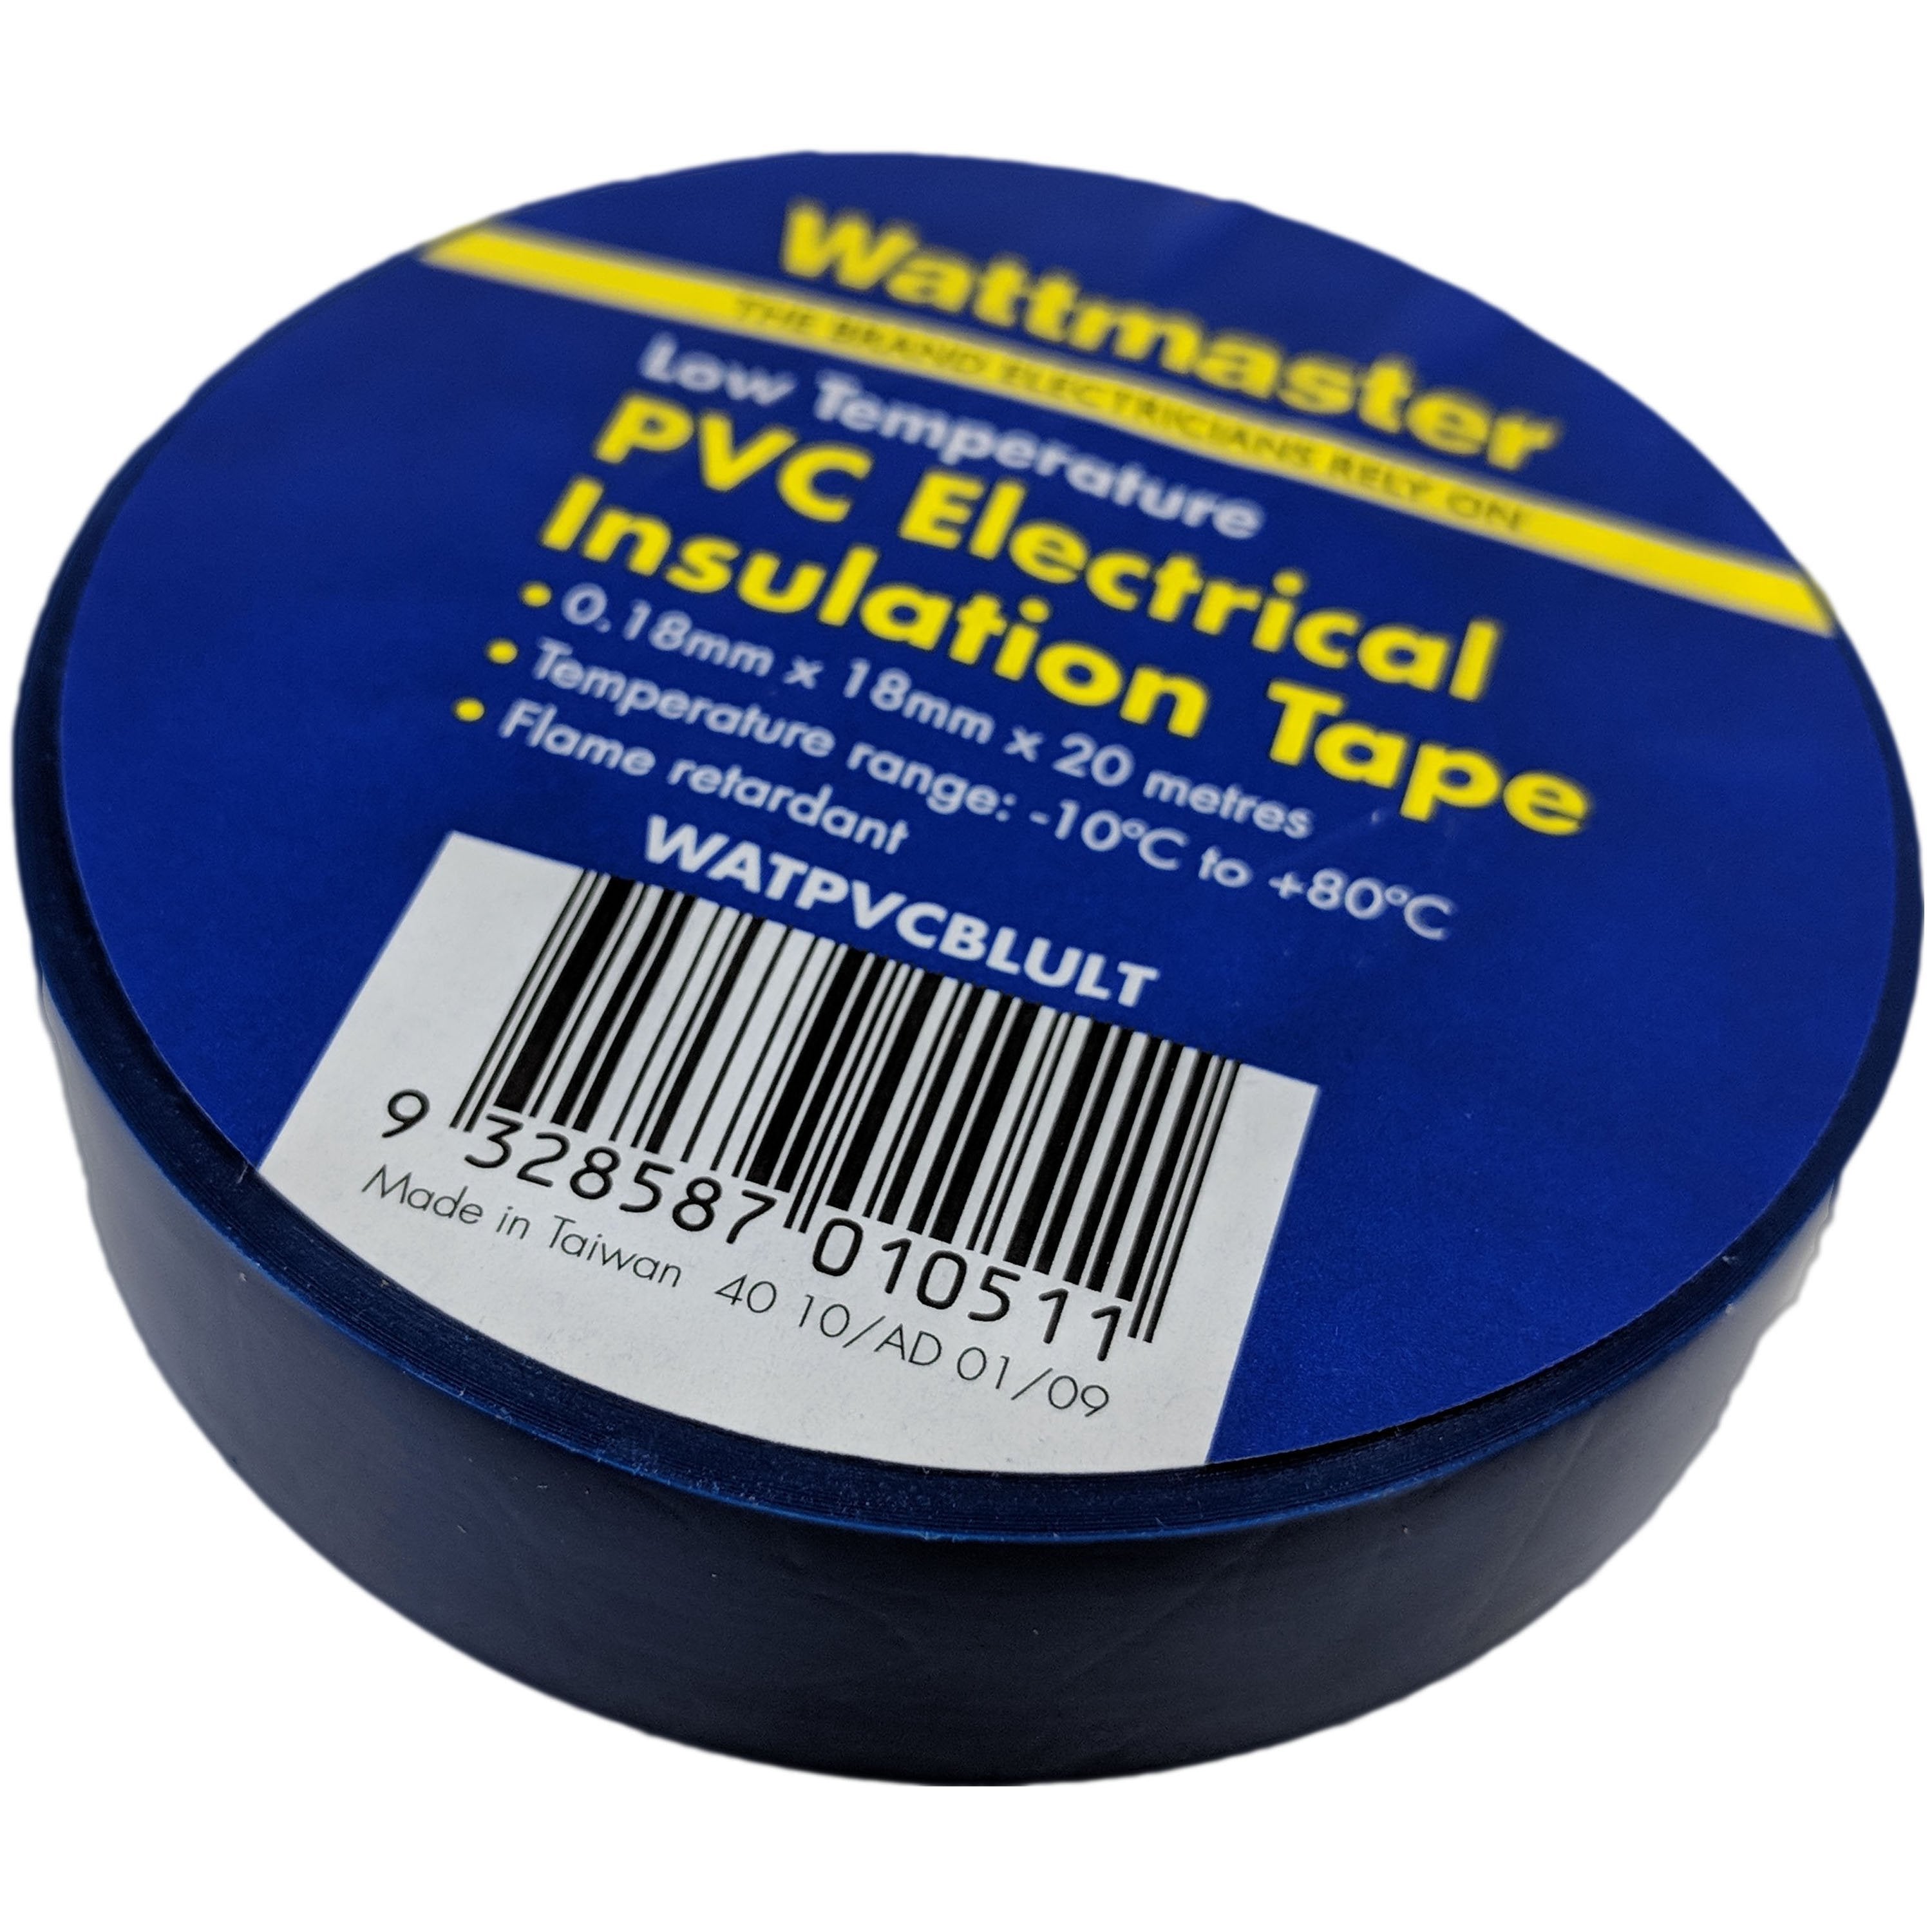 Wattmaster VINYL/PVC Electrical Tape - Insulating 18mm x 20m (1 Roll)